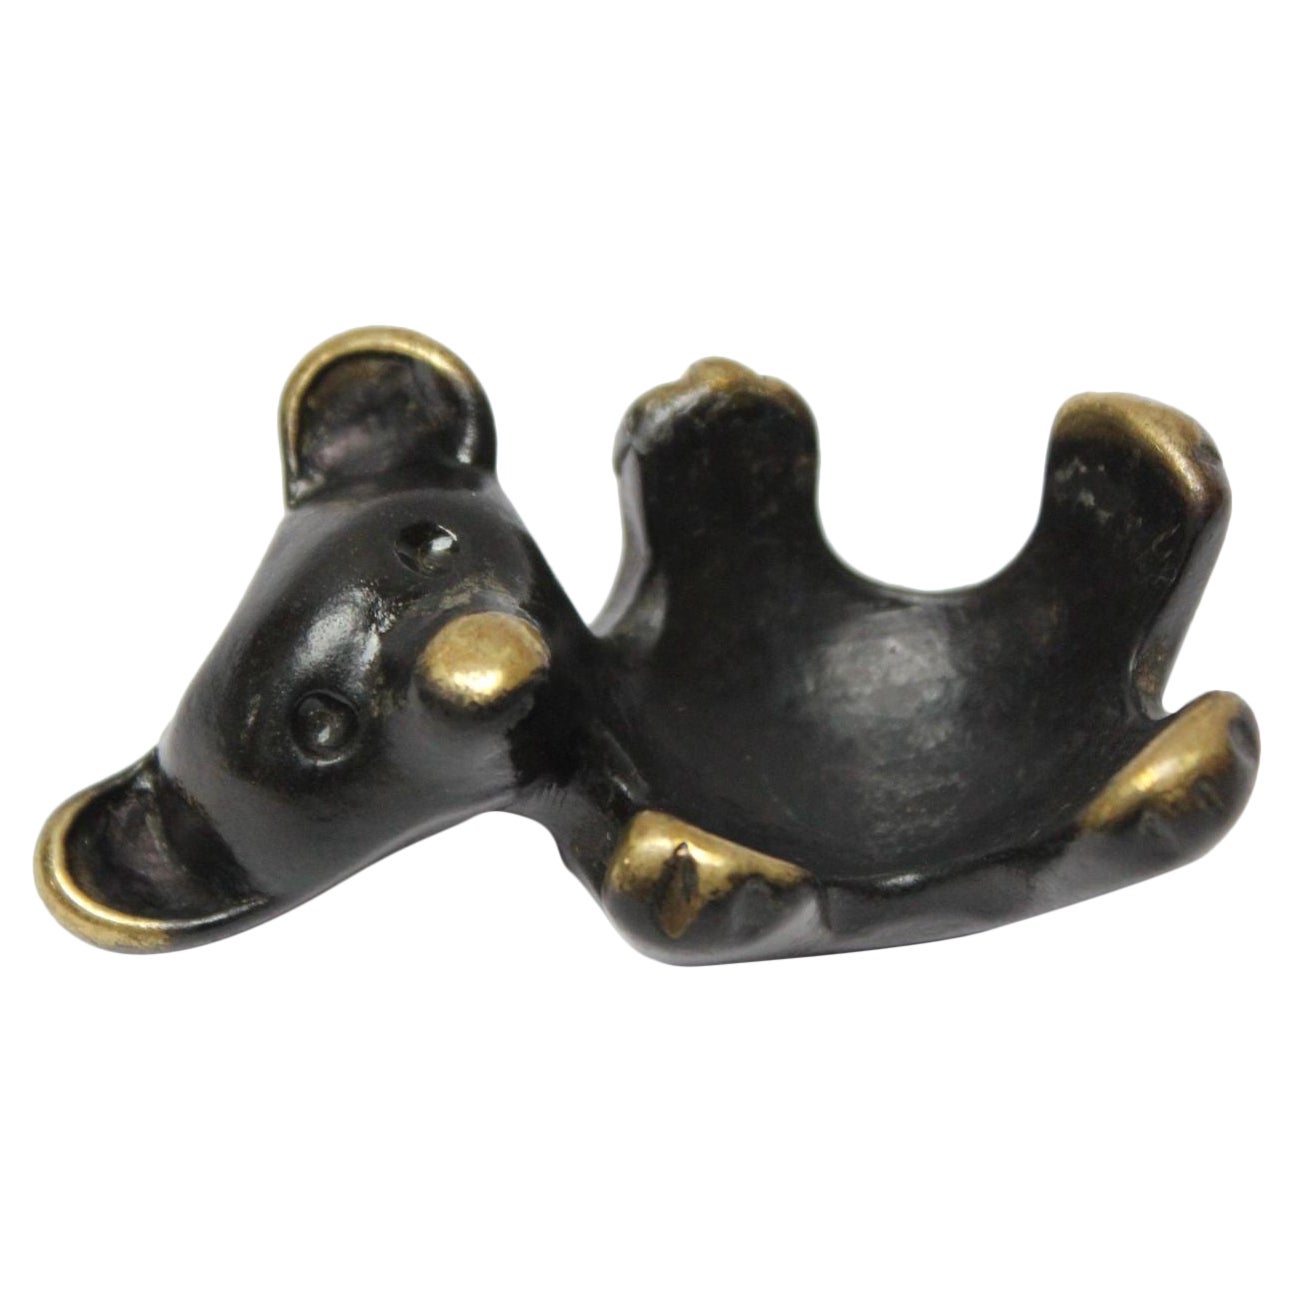 Blackened Brass Bear Candleholder/Figurine by Walter Bosse and Herta Baller